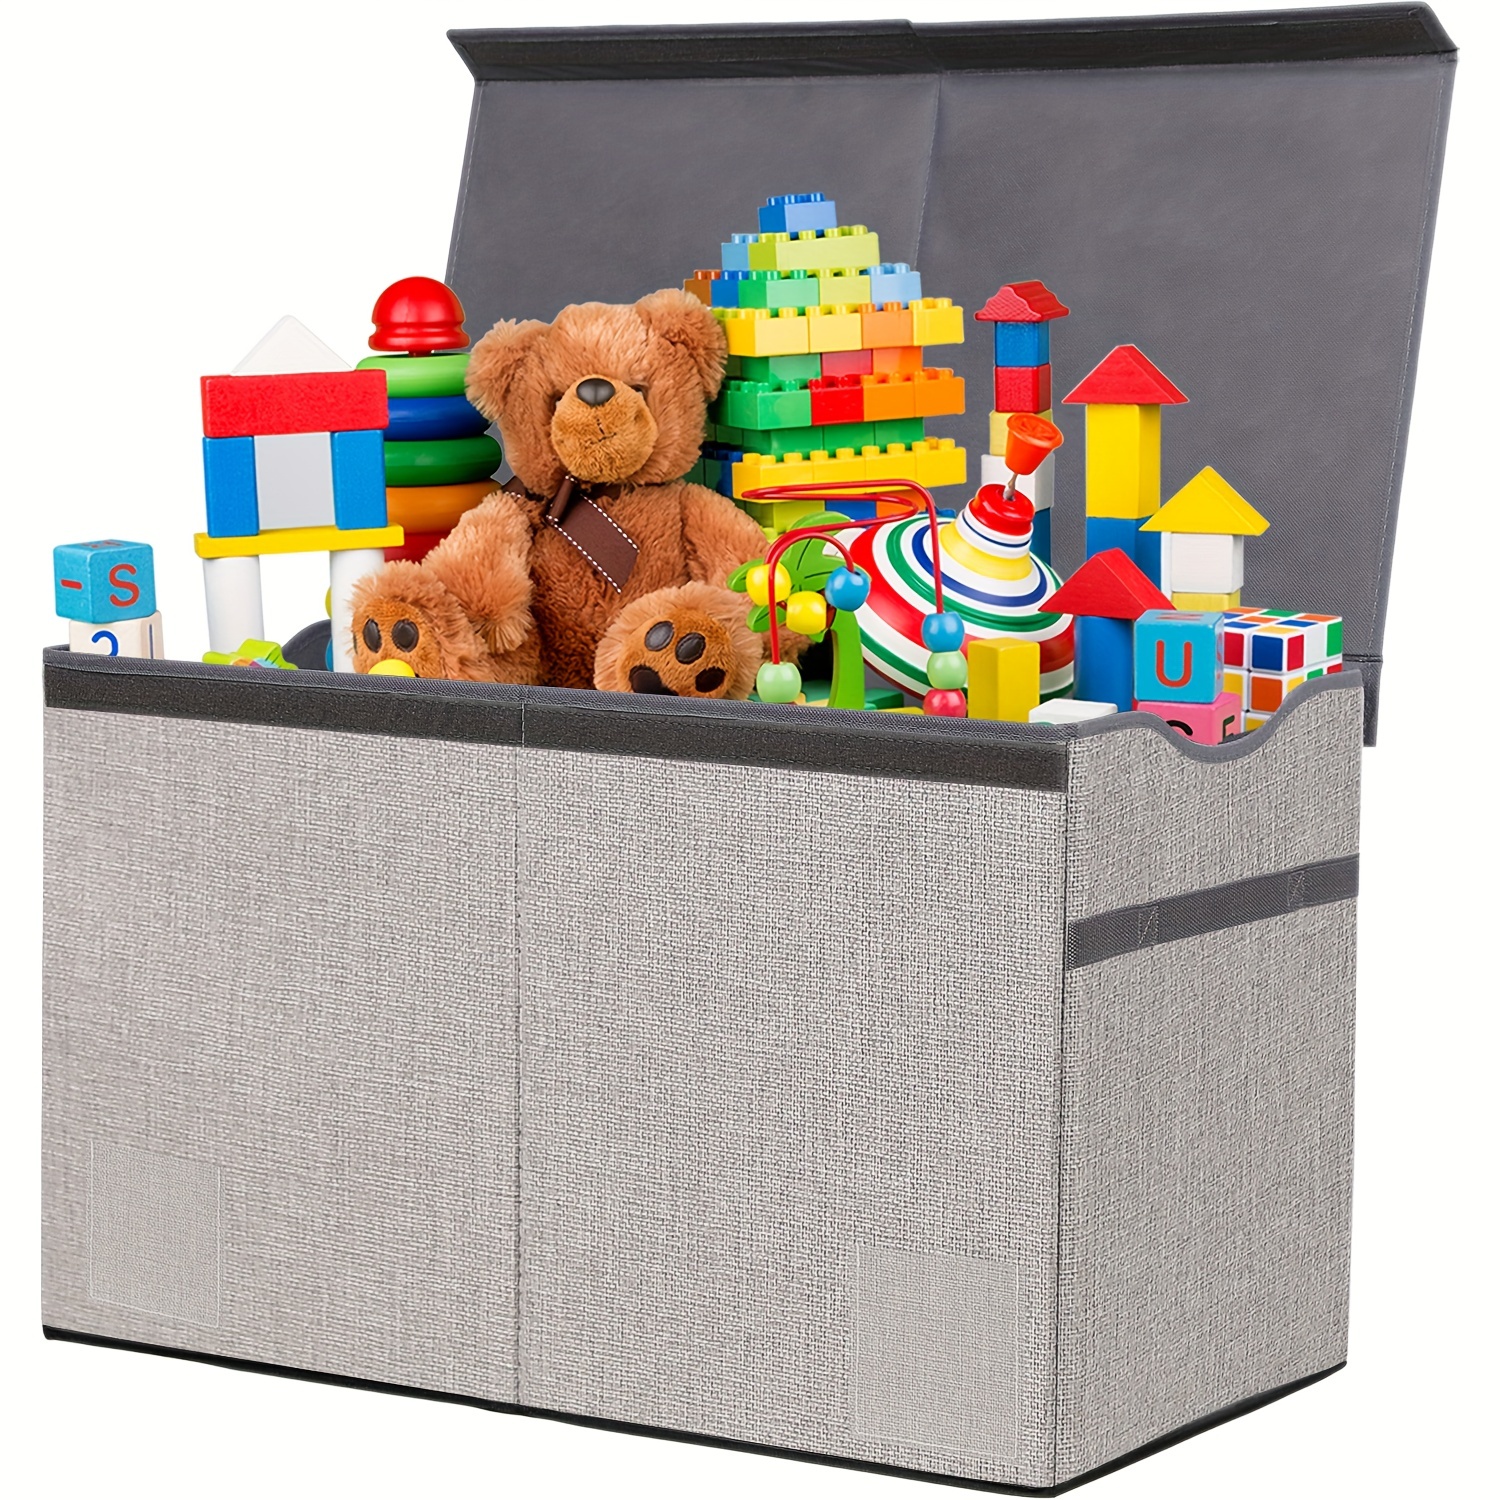 Kids Storage Box: Buy Toy Storage Box Online at Best Prices - Pepperfry